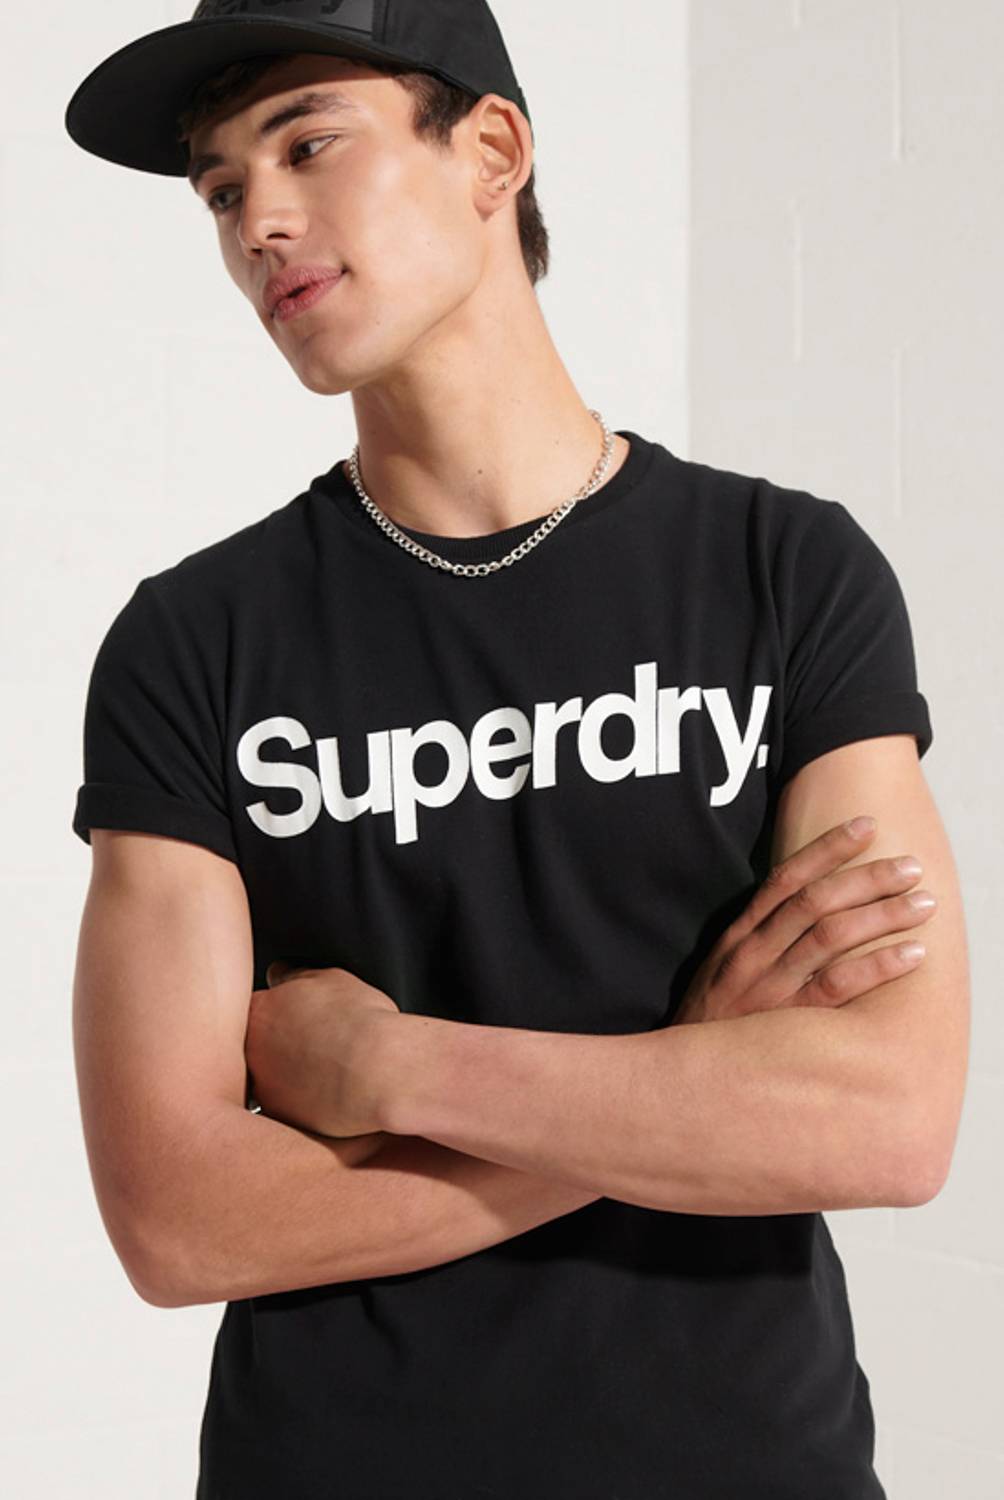 SUPERDRY - Superdry Polera Hombre